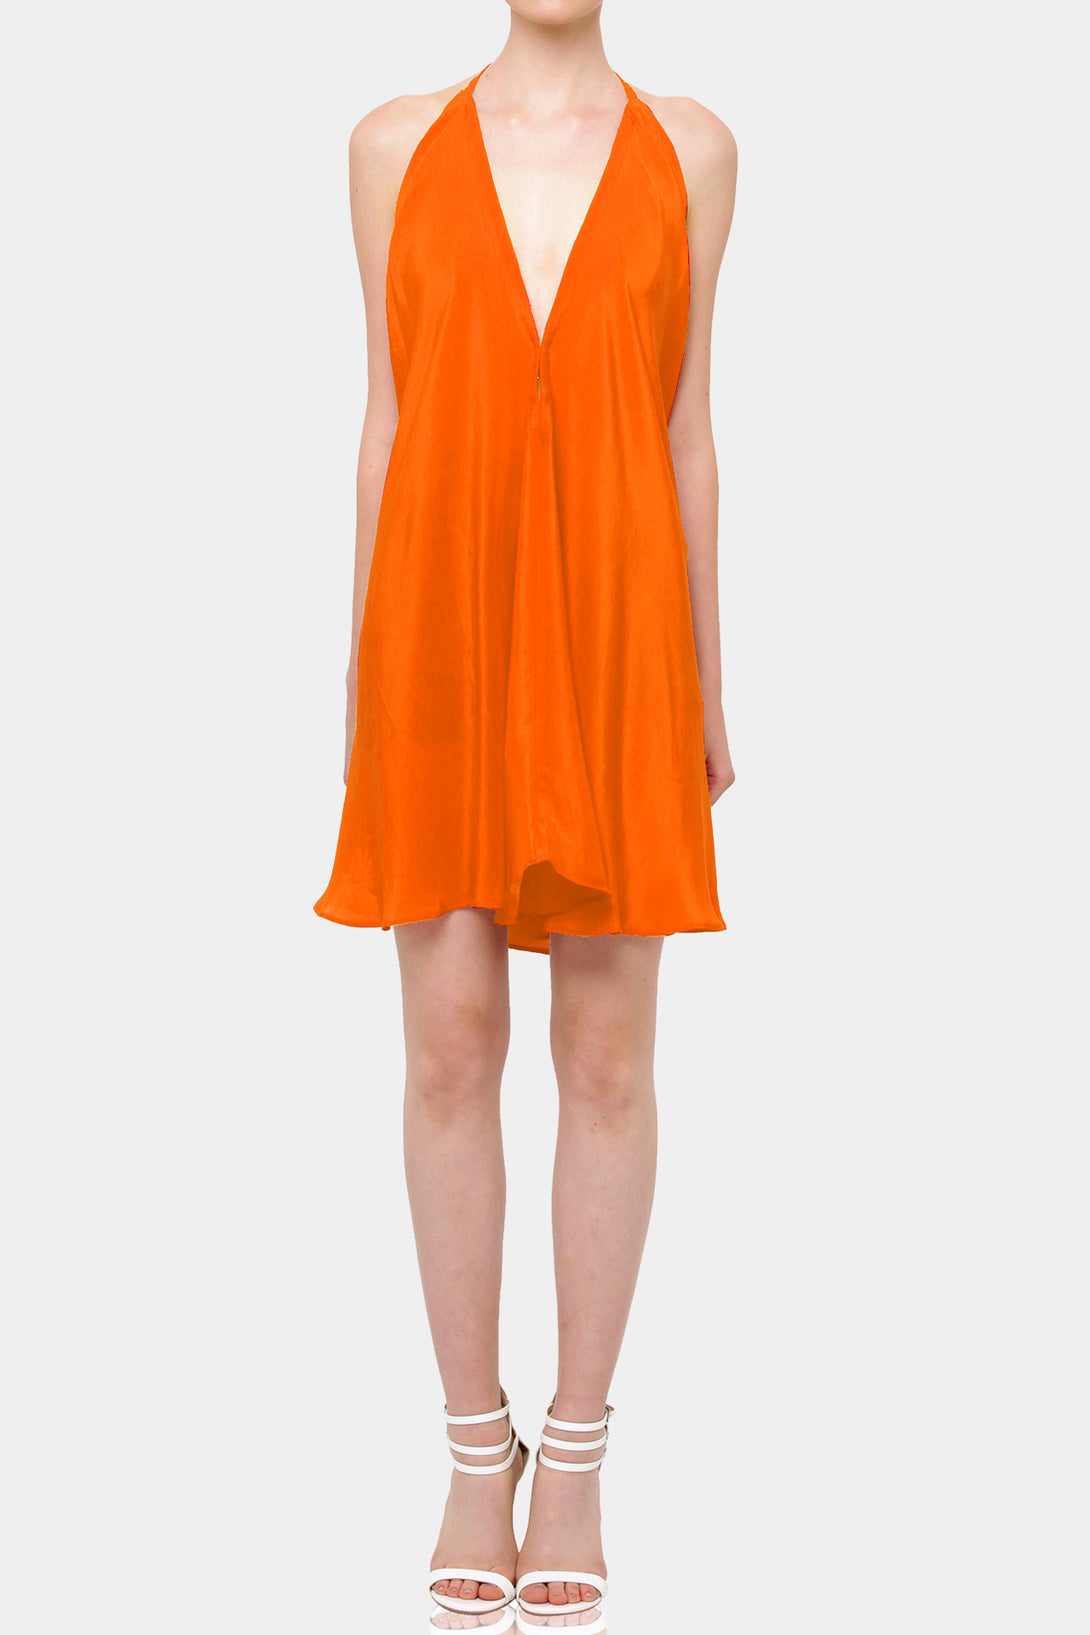  orange dress mini, Shahida Parides, sexy short dresses, short sleeveless dress,